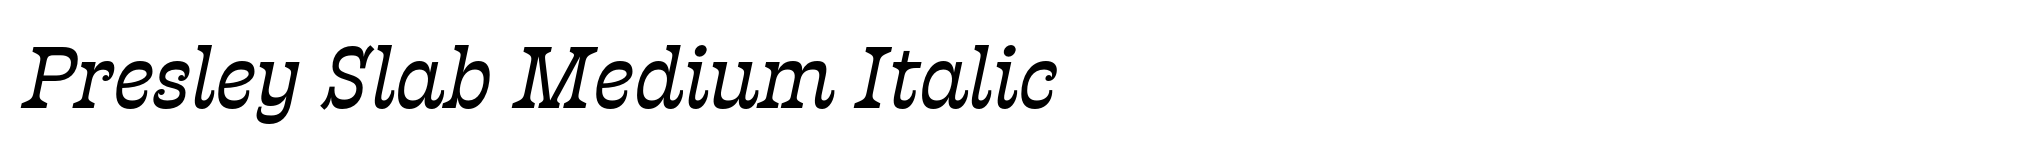 Presley Slab Medium Italic image